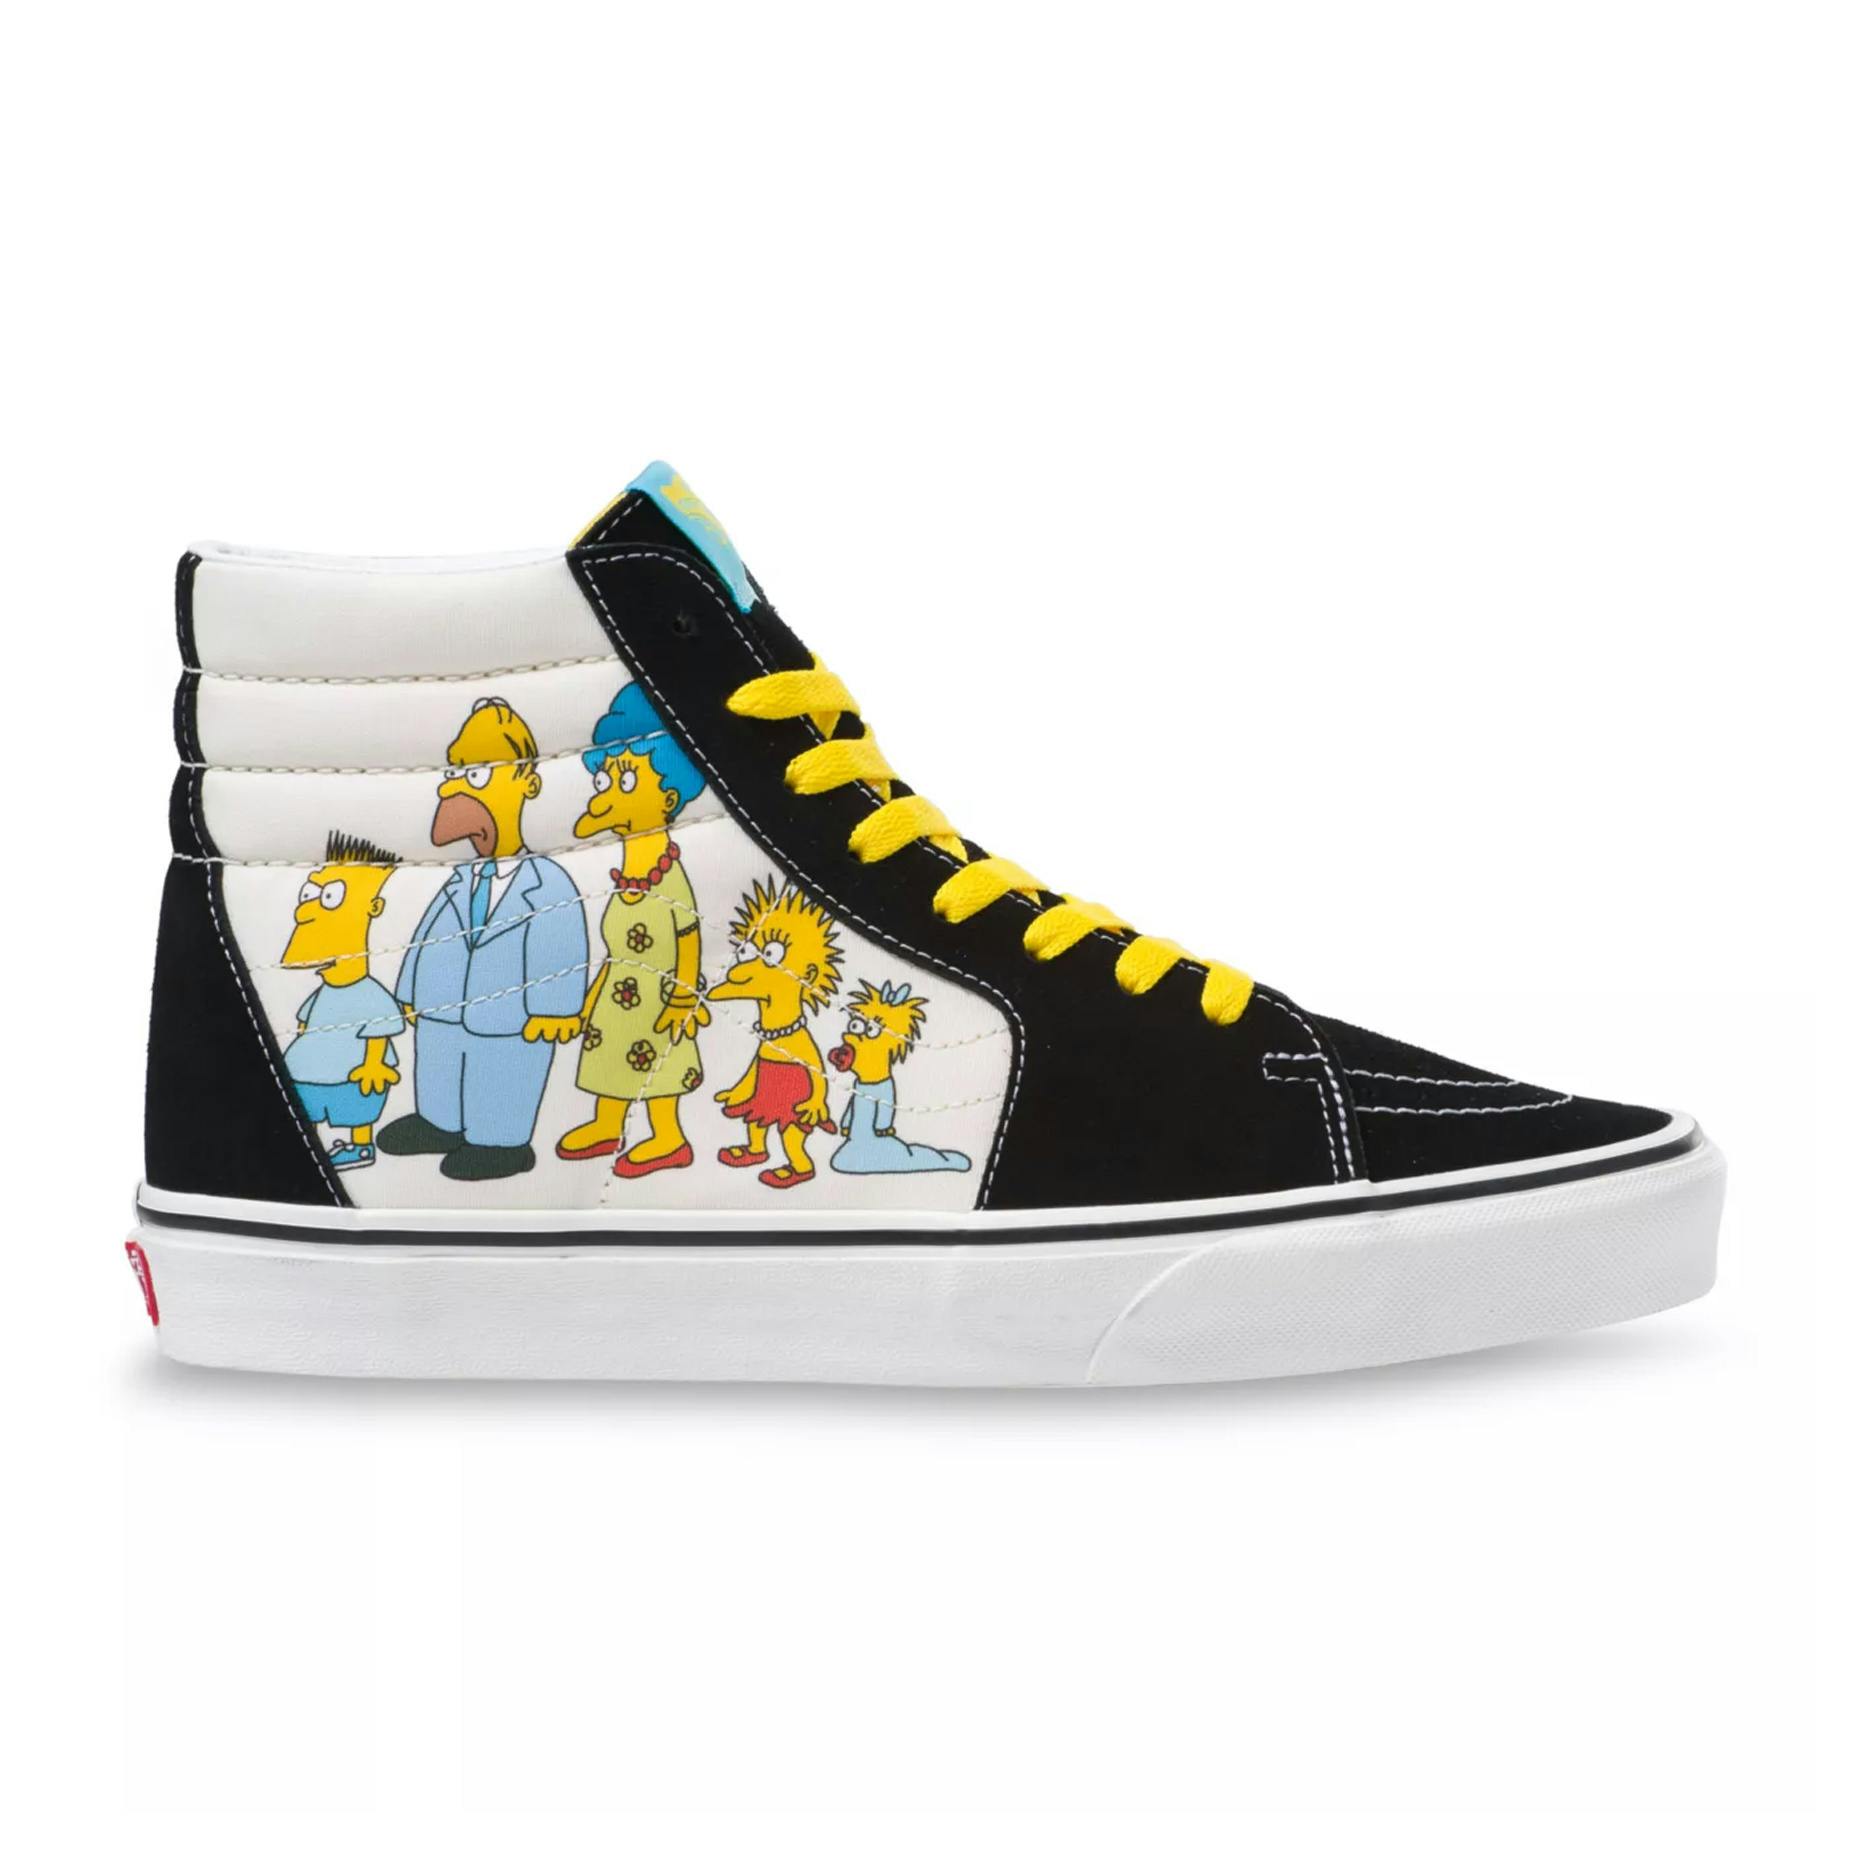 Vans x The Simpsons Sk8 Hi Skate Shoe Simpson Family